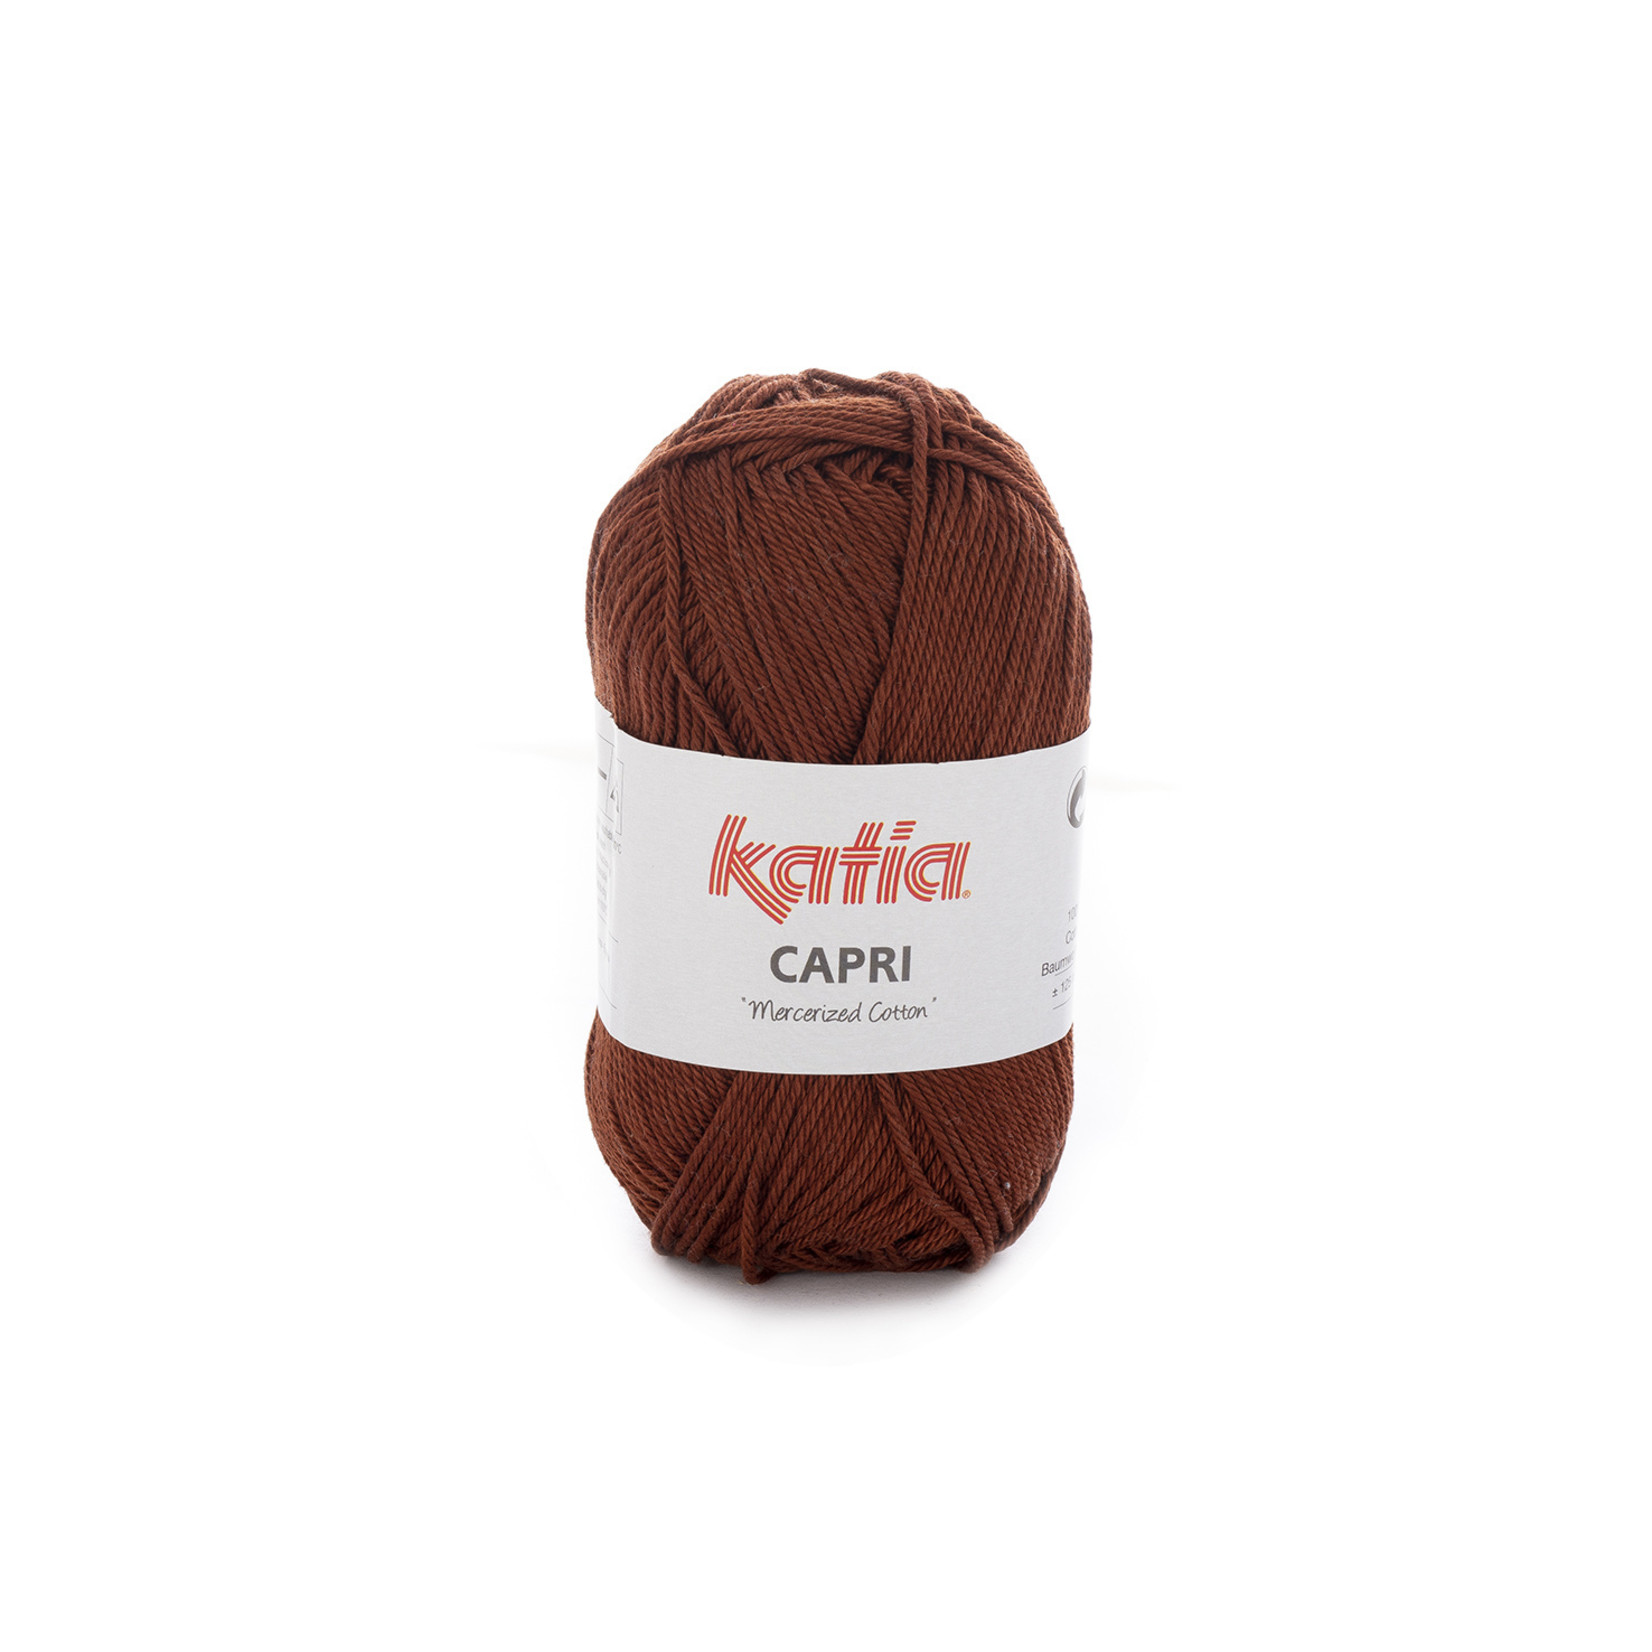 Katia Katia Capri - kleur 162 Koperbruin - bundel 5 x 50 gr. / 125 m. - 100% katoen